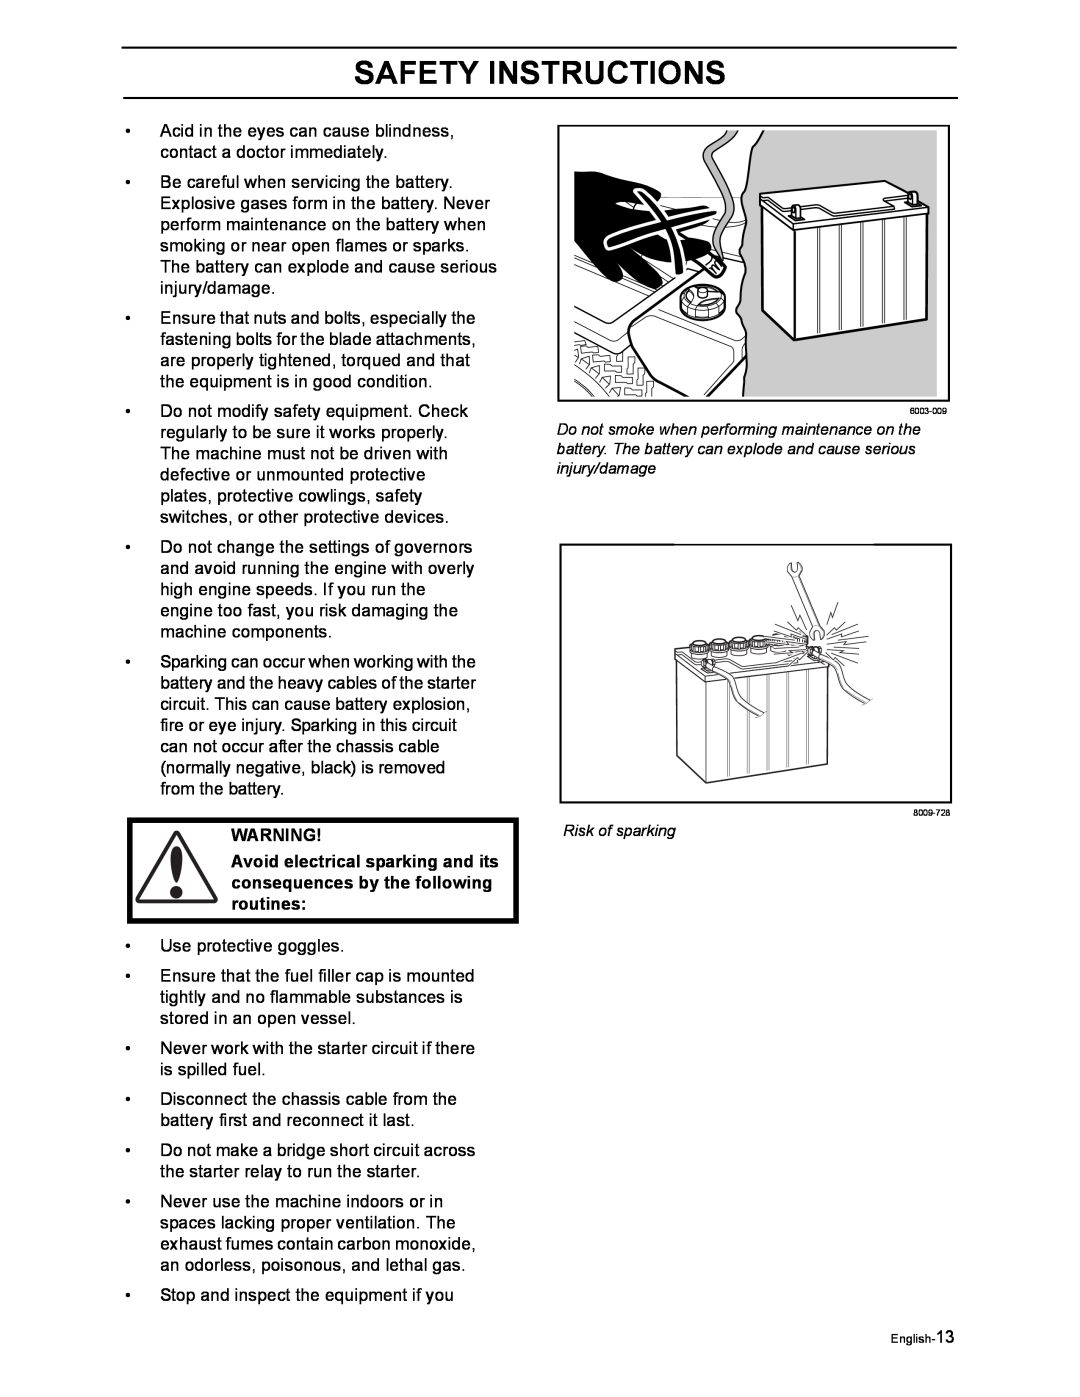 Yazoo/Kees ZEKW48190 manual Safety Instructions, Risk of sparking, English-13 